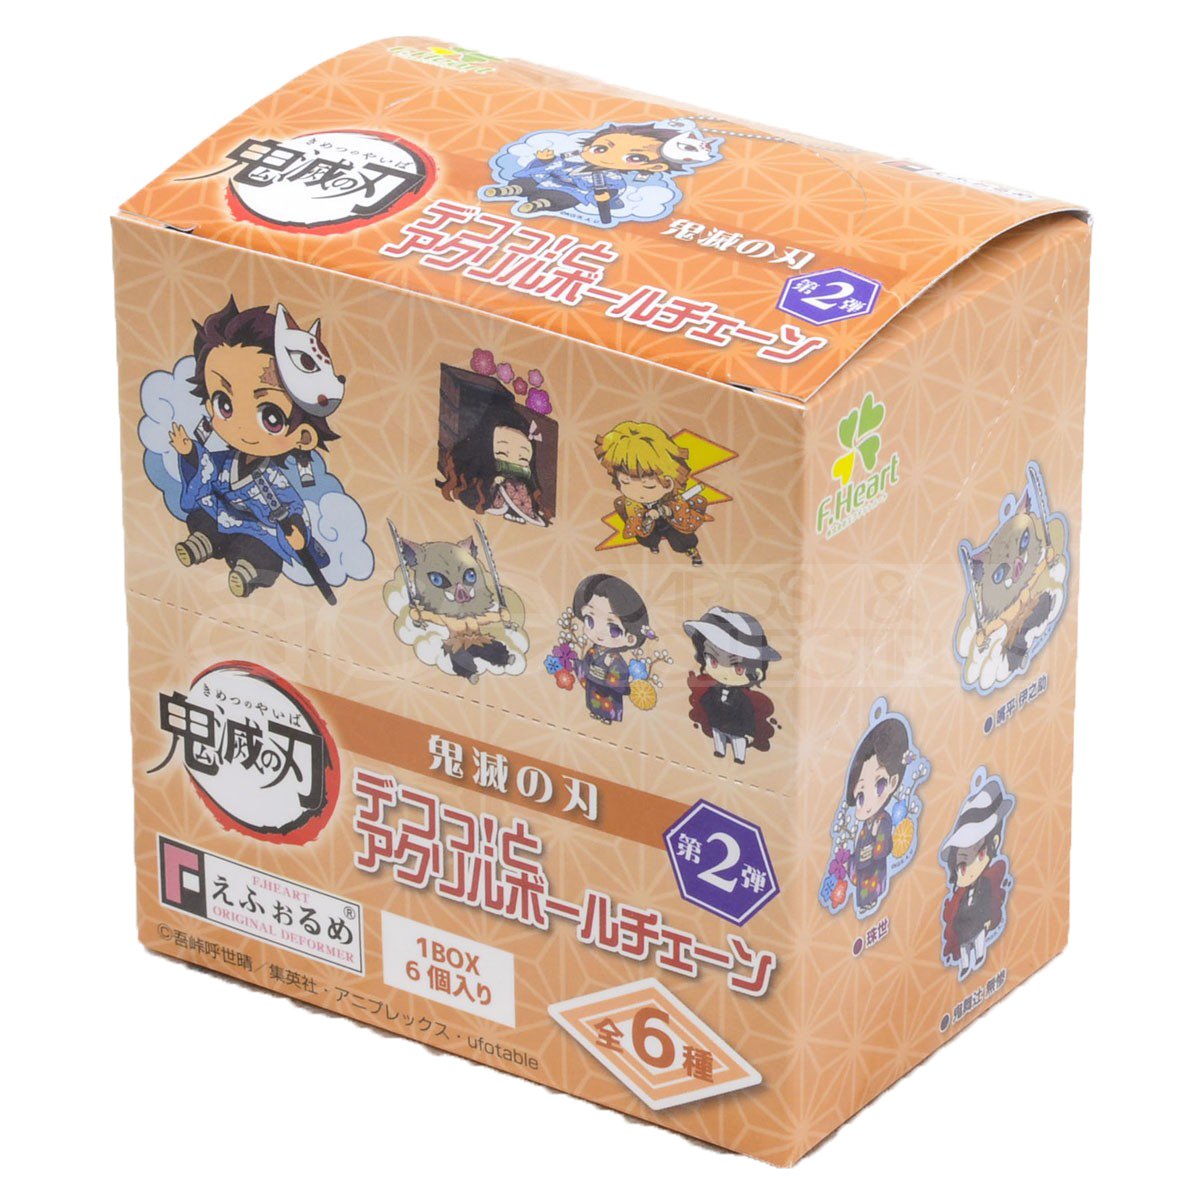 Chokkorin Mascot Kimetsu no Yaiba / Demon Slayer 6 Pack Box Reissue